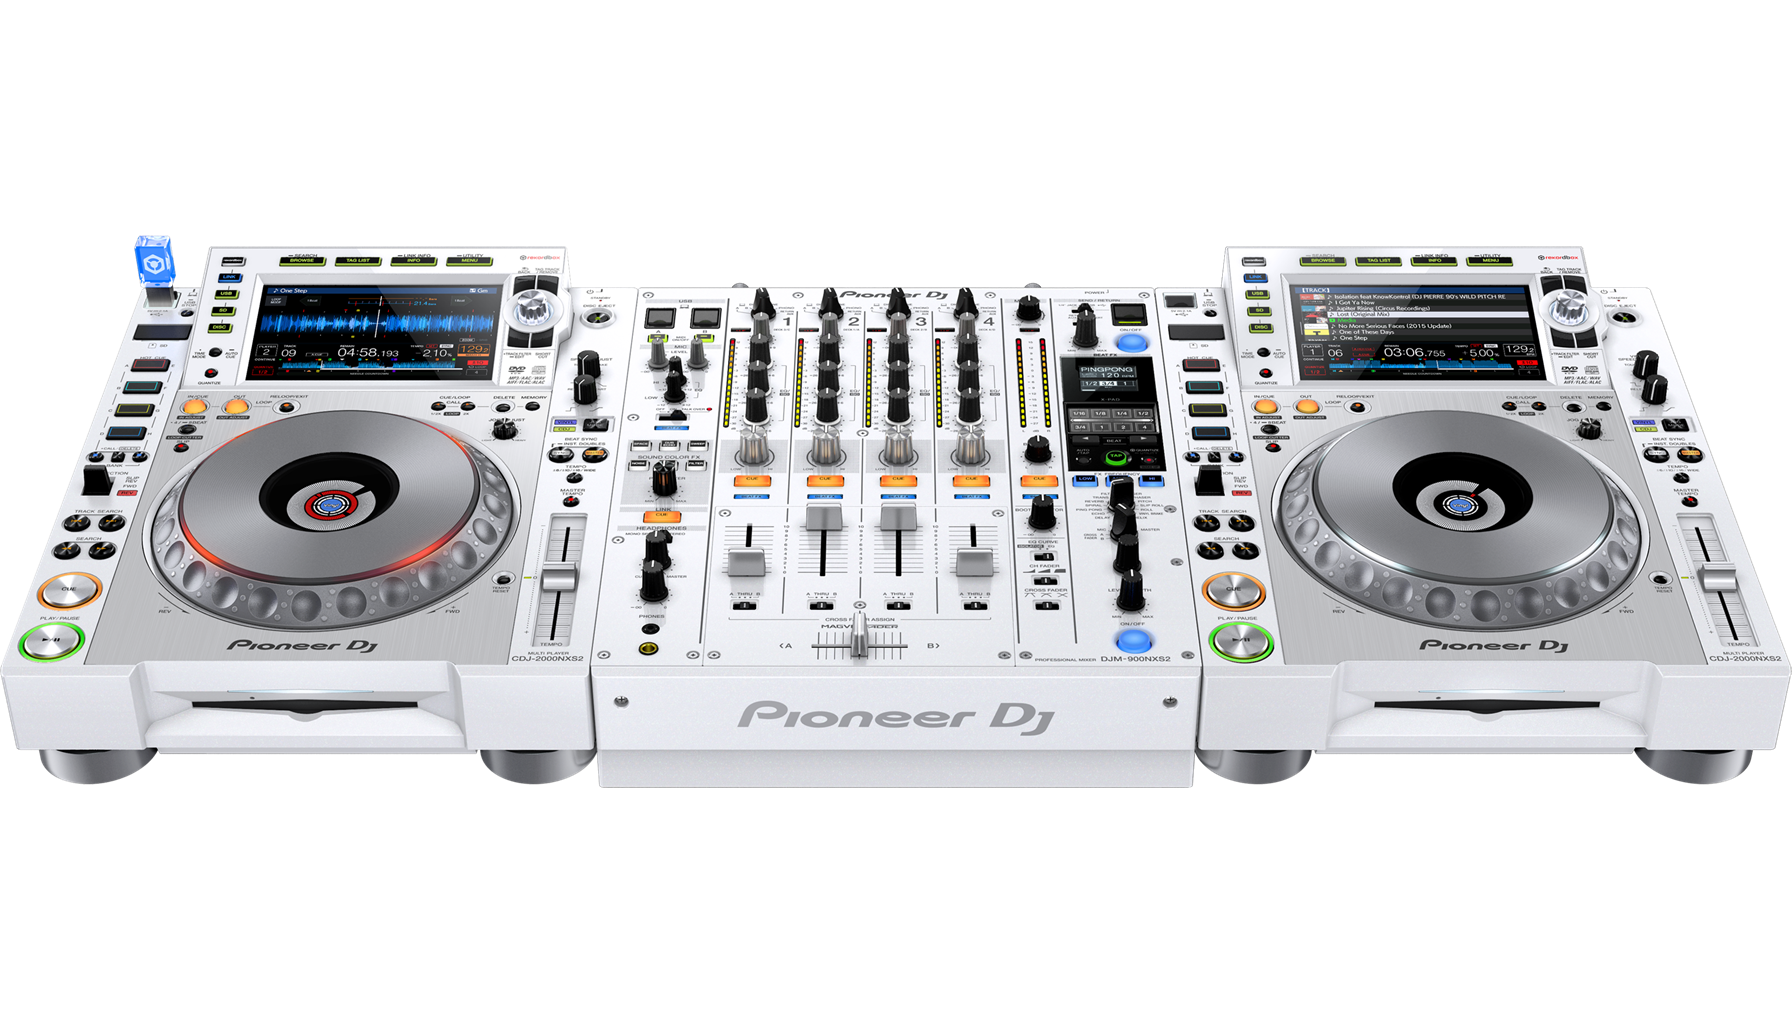 CDJ-2000NXS2-W (archived) Professional DJ multi player with disc 